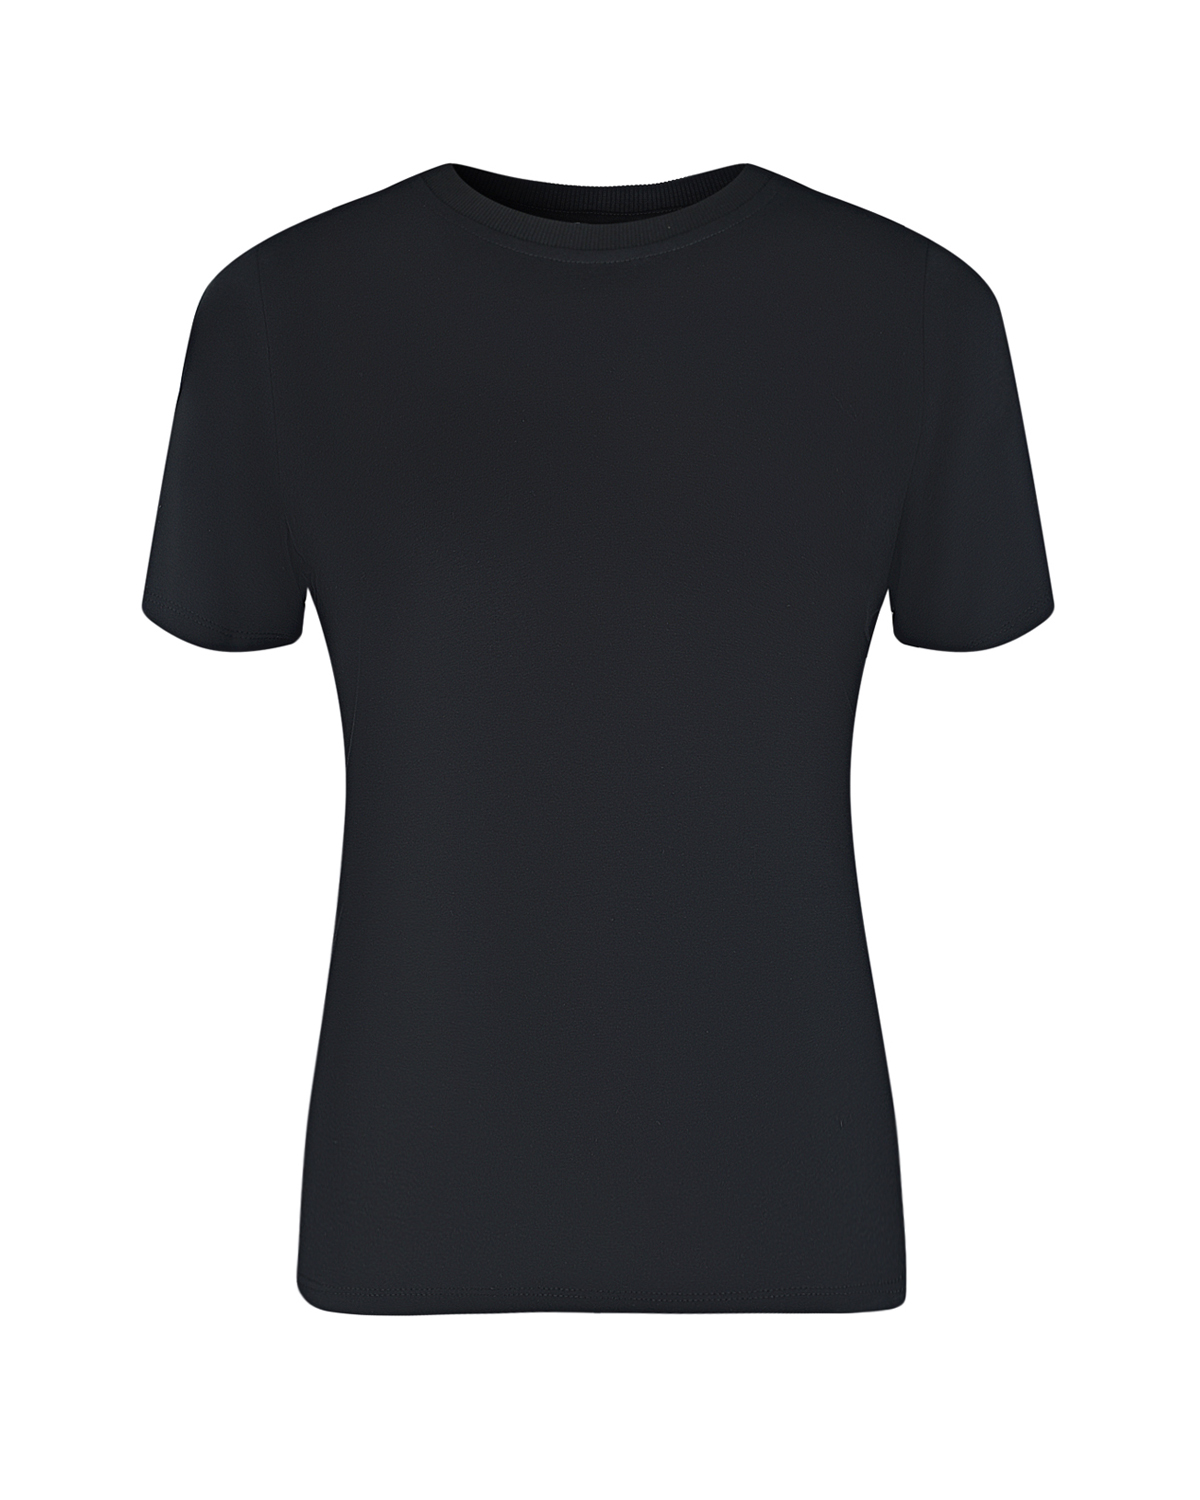 Черная базовая футболка Dan Maralex, размер 44, цвет нет цвета